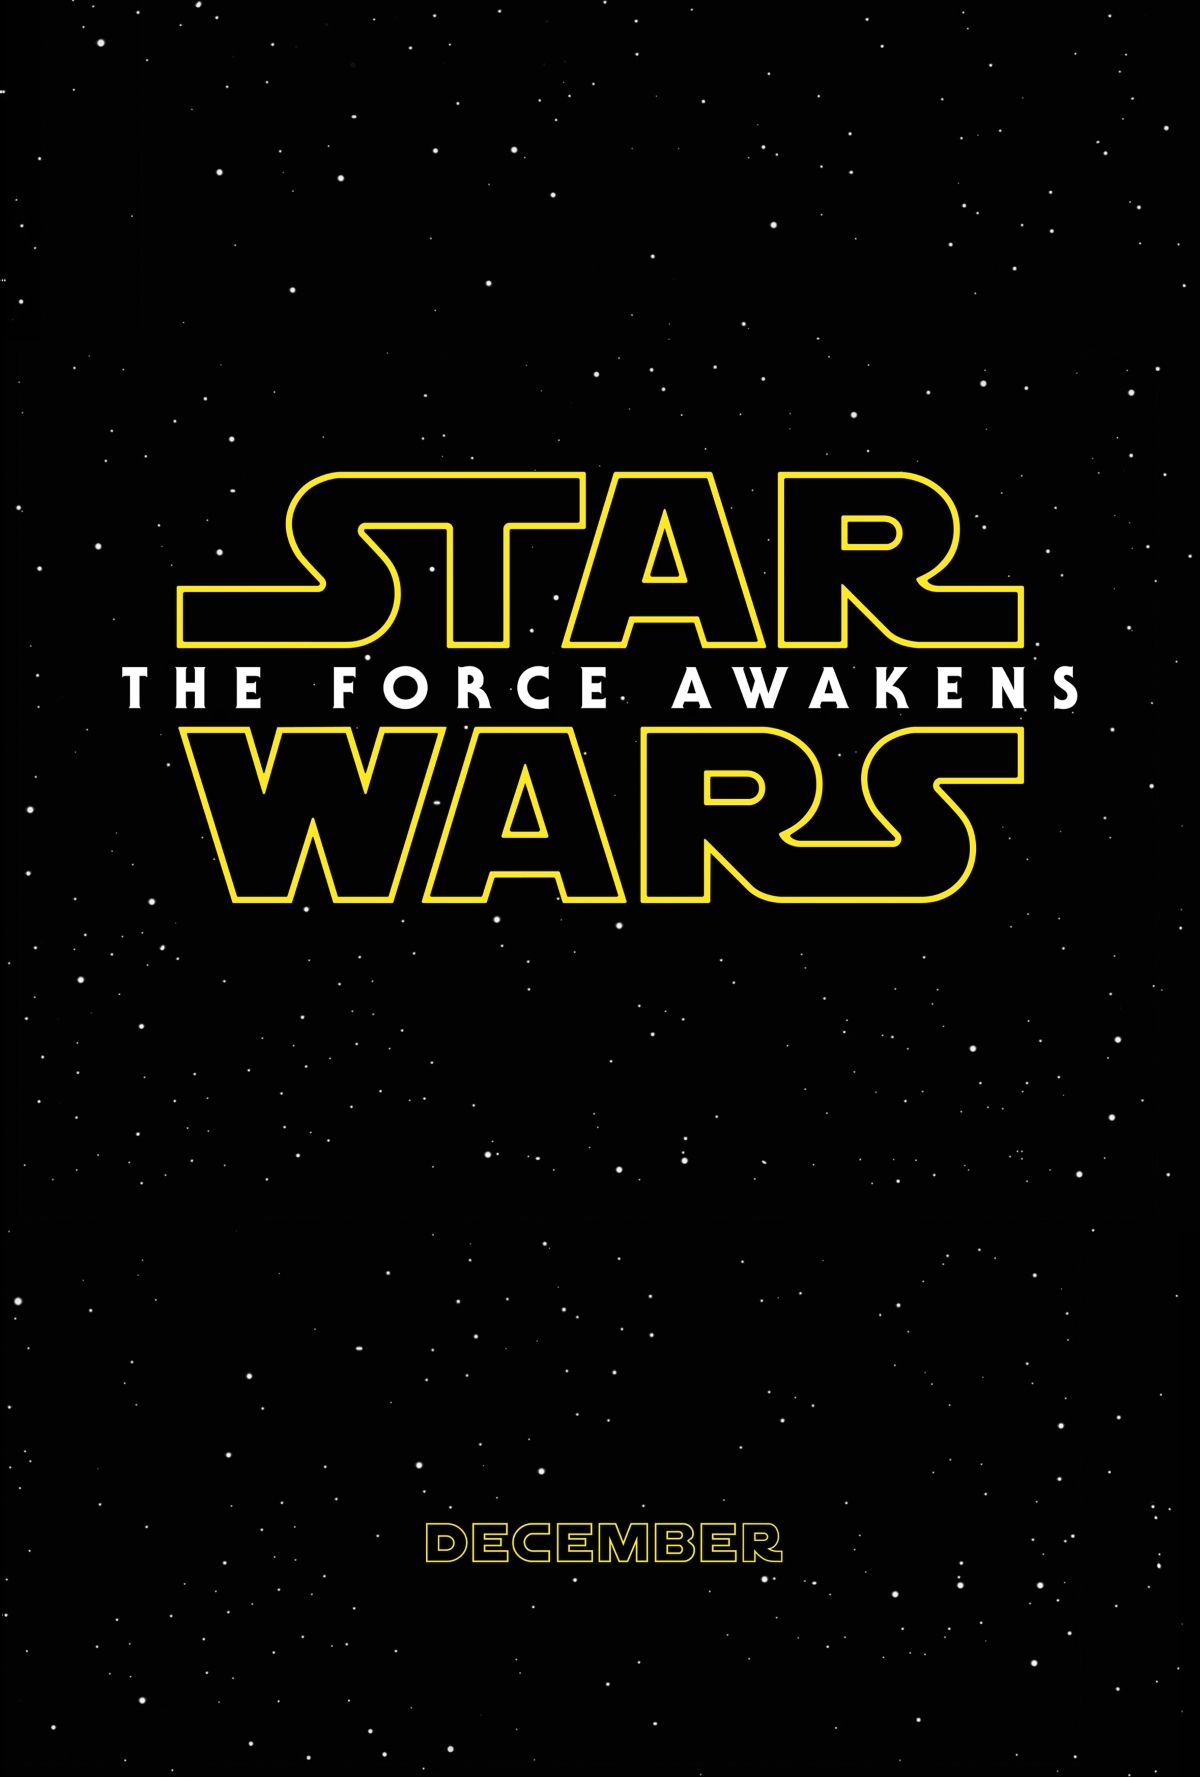 Star Wars 7 Force Awakens Poster